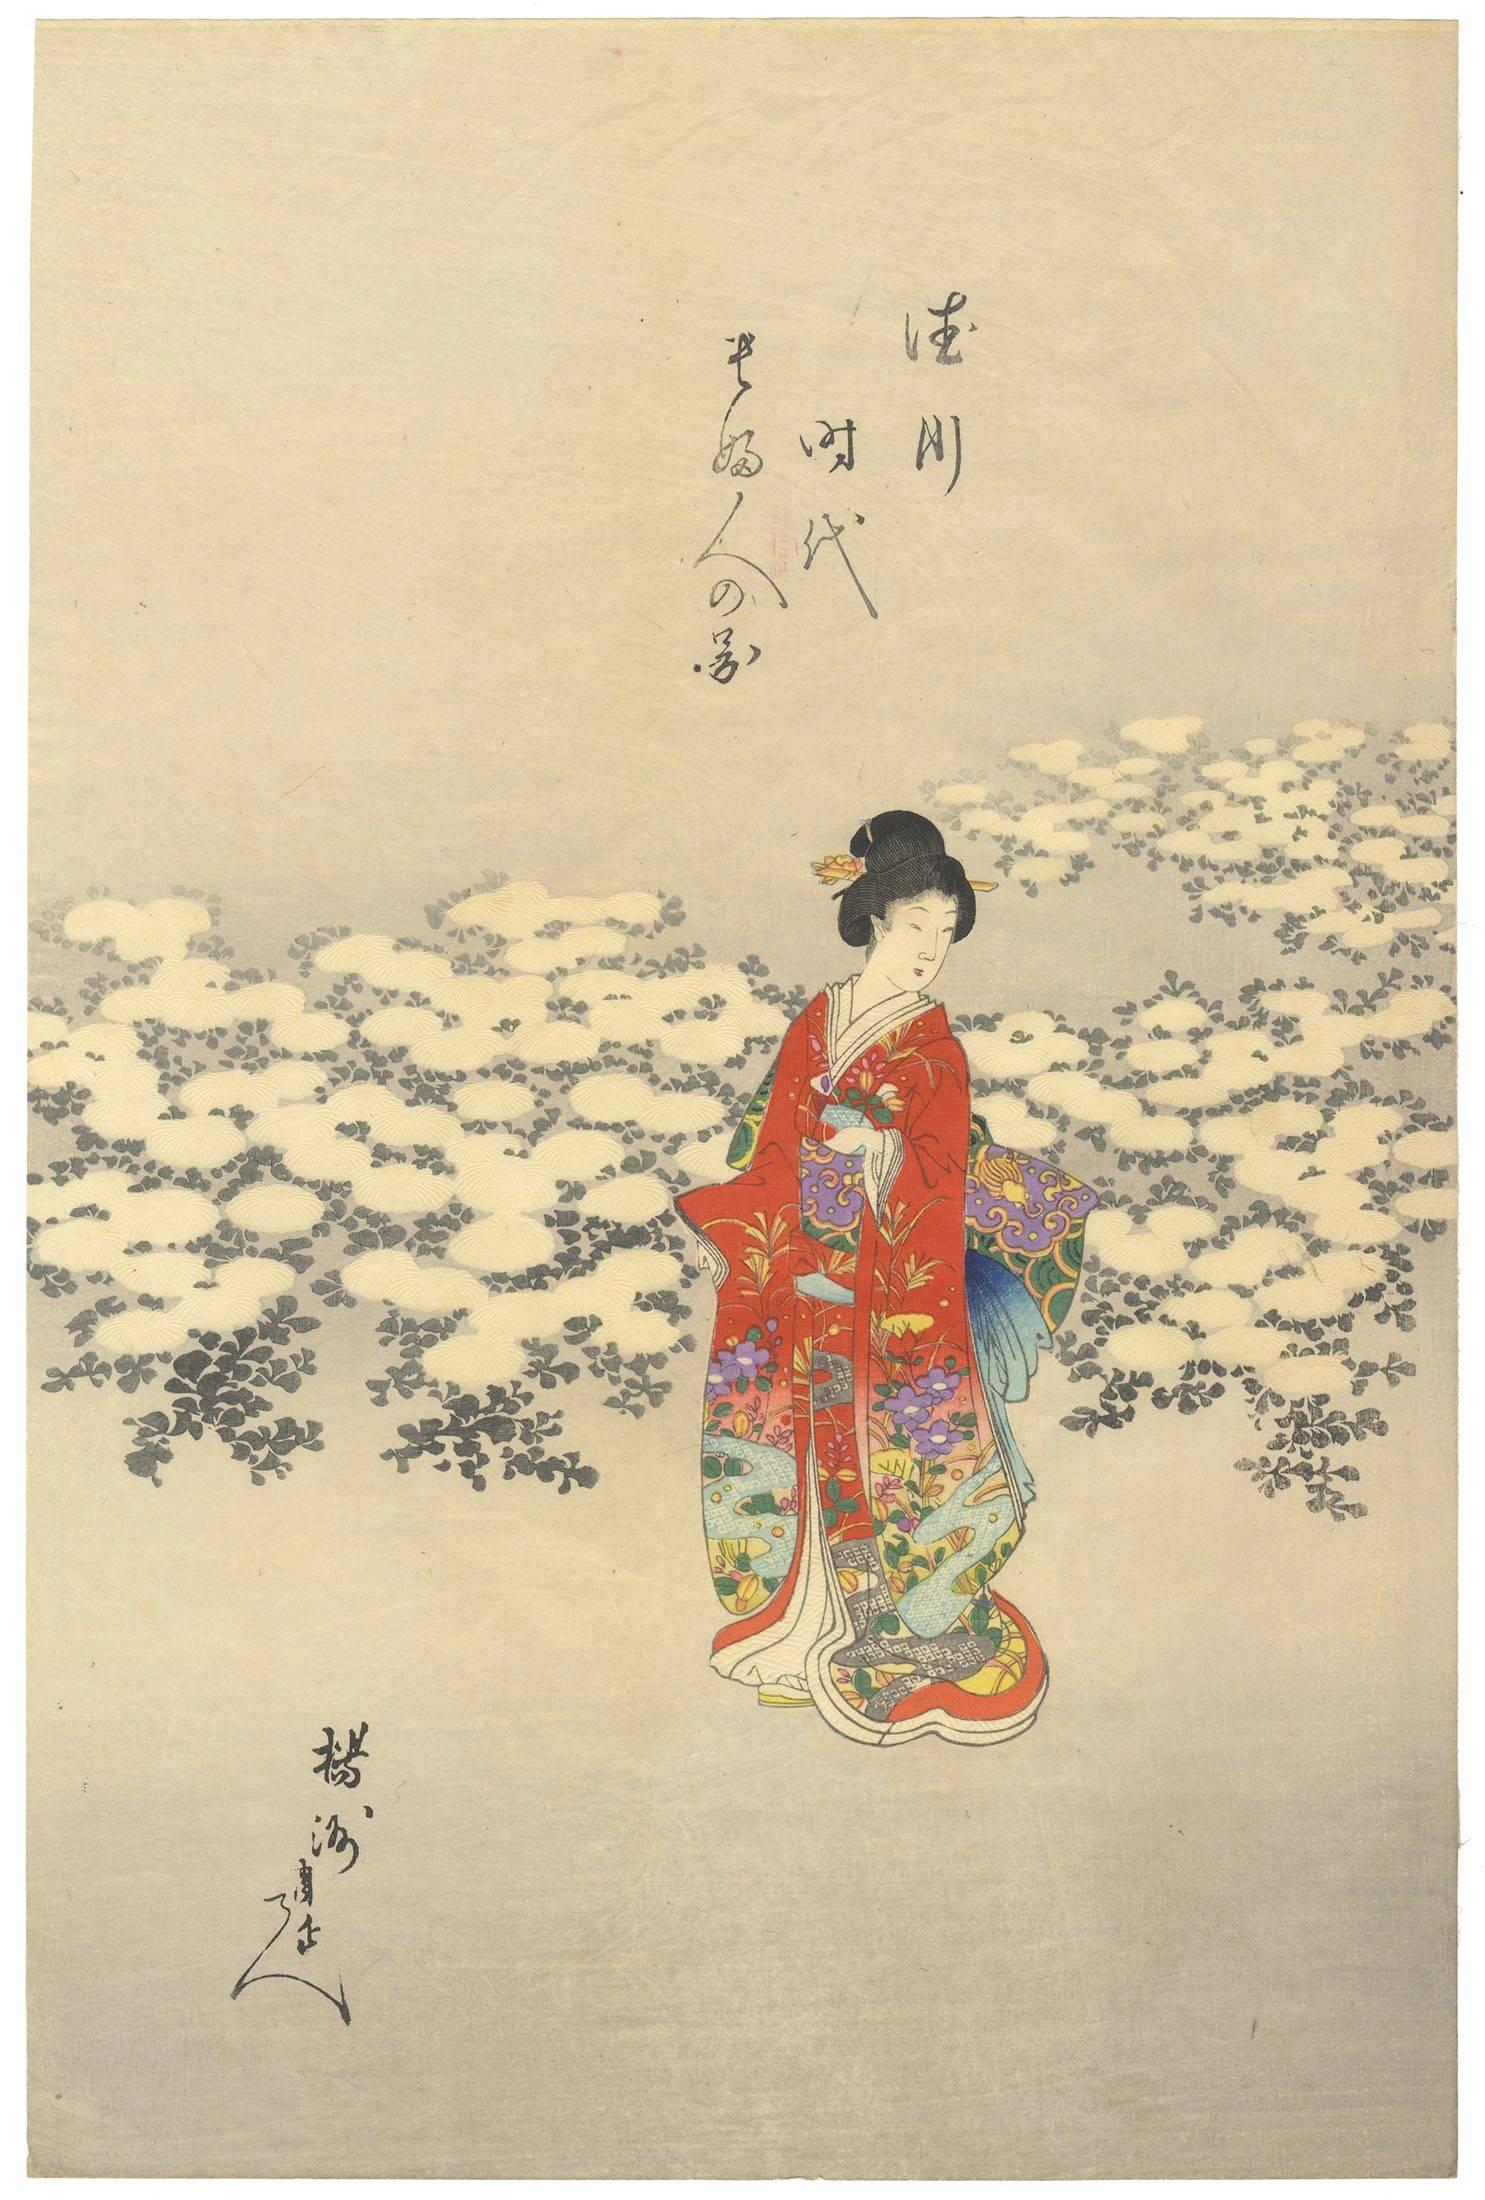 Artist: Chikanobu Yoshu (1838-1912)
Title: Woman Red with White Chrysanthemum
Series Title: High-ranking Ladies of Tokugawa era
Date: Late 19th century
Publisher: Hasegawa Tsunejiro
L: 23.8cm x 35.7cm, M: 24.7cm x 35.7cm, R: 24.6cm x 35.7cm

This